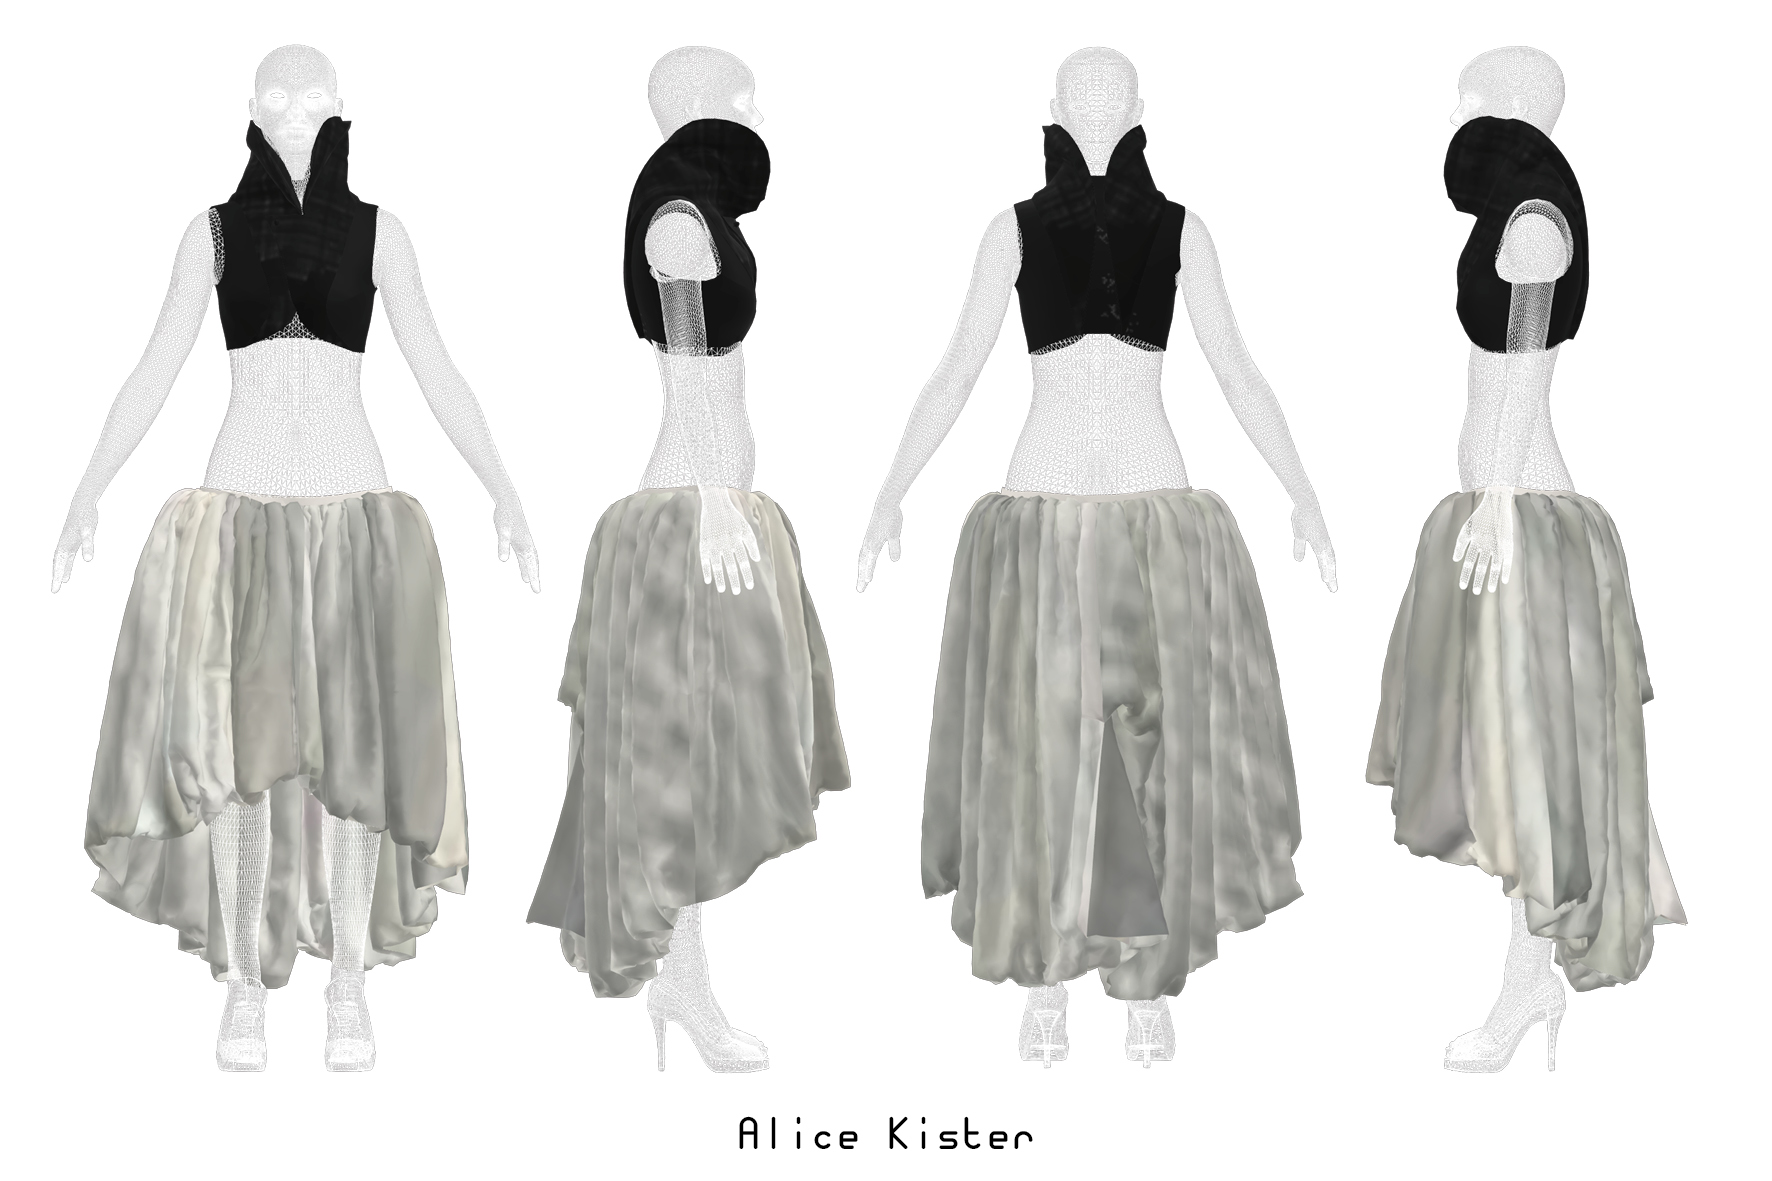 Design Alice Kister